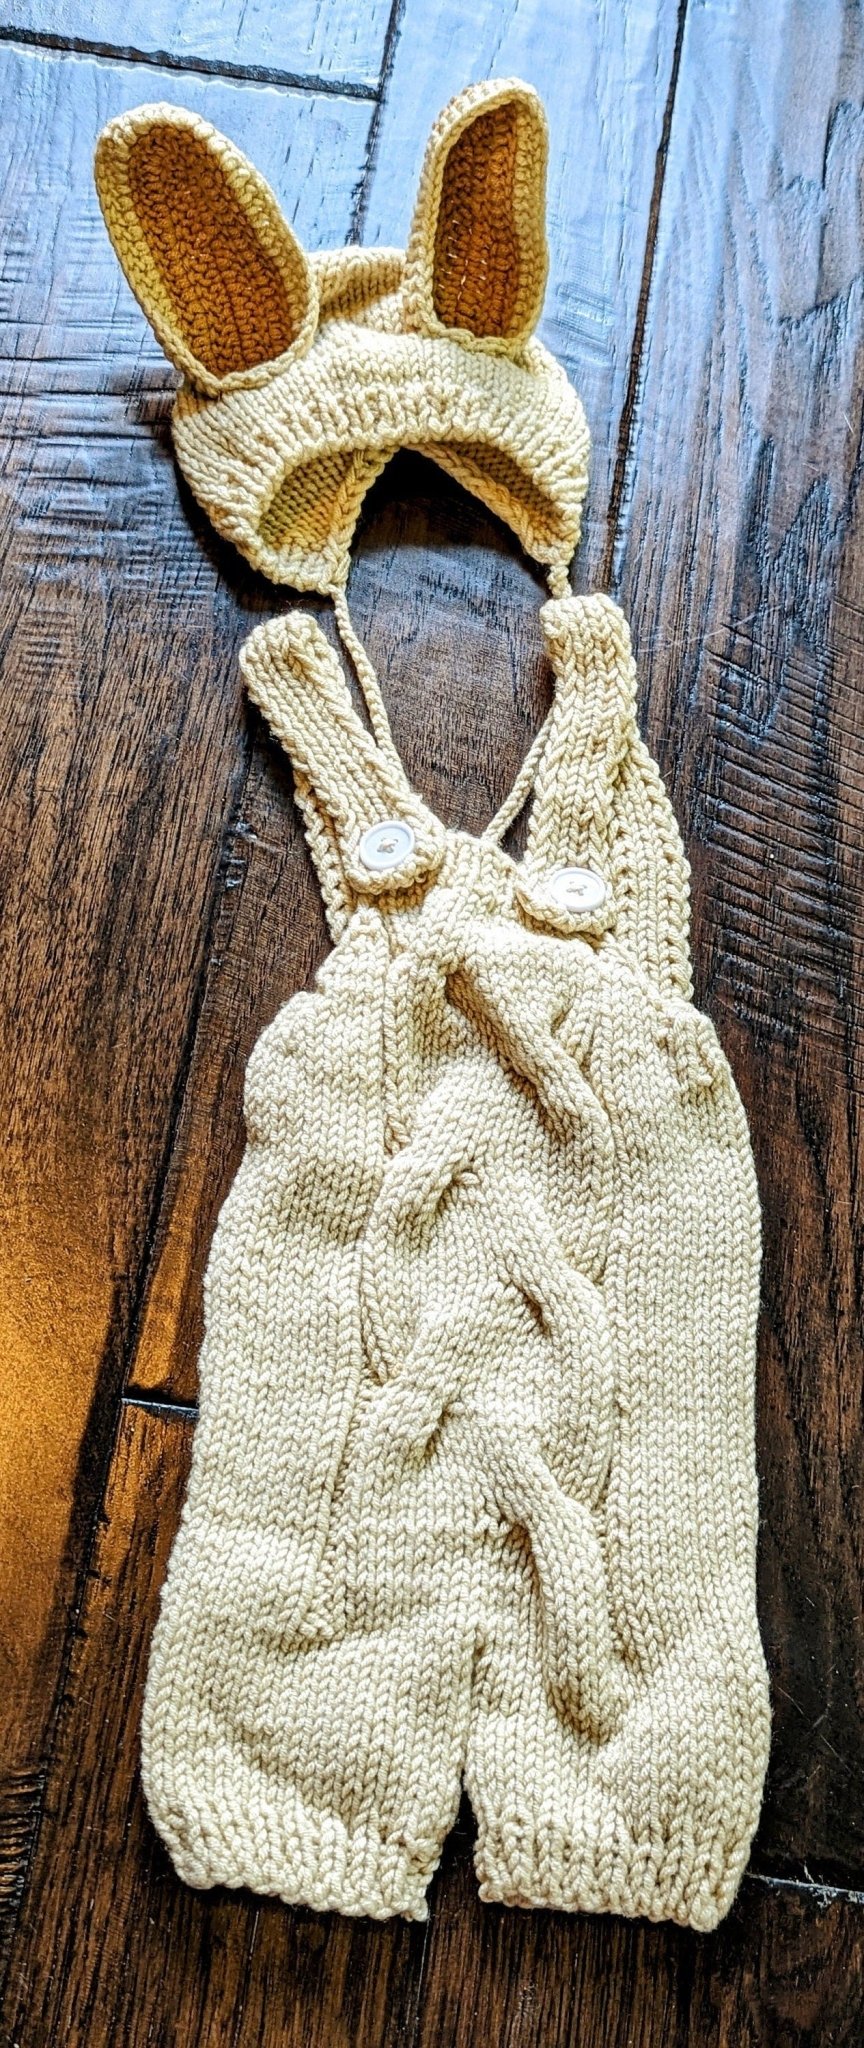 Tan Knit Rabbit Newborn Outfit with Ears - Plum Sugar Shoppe